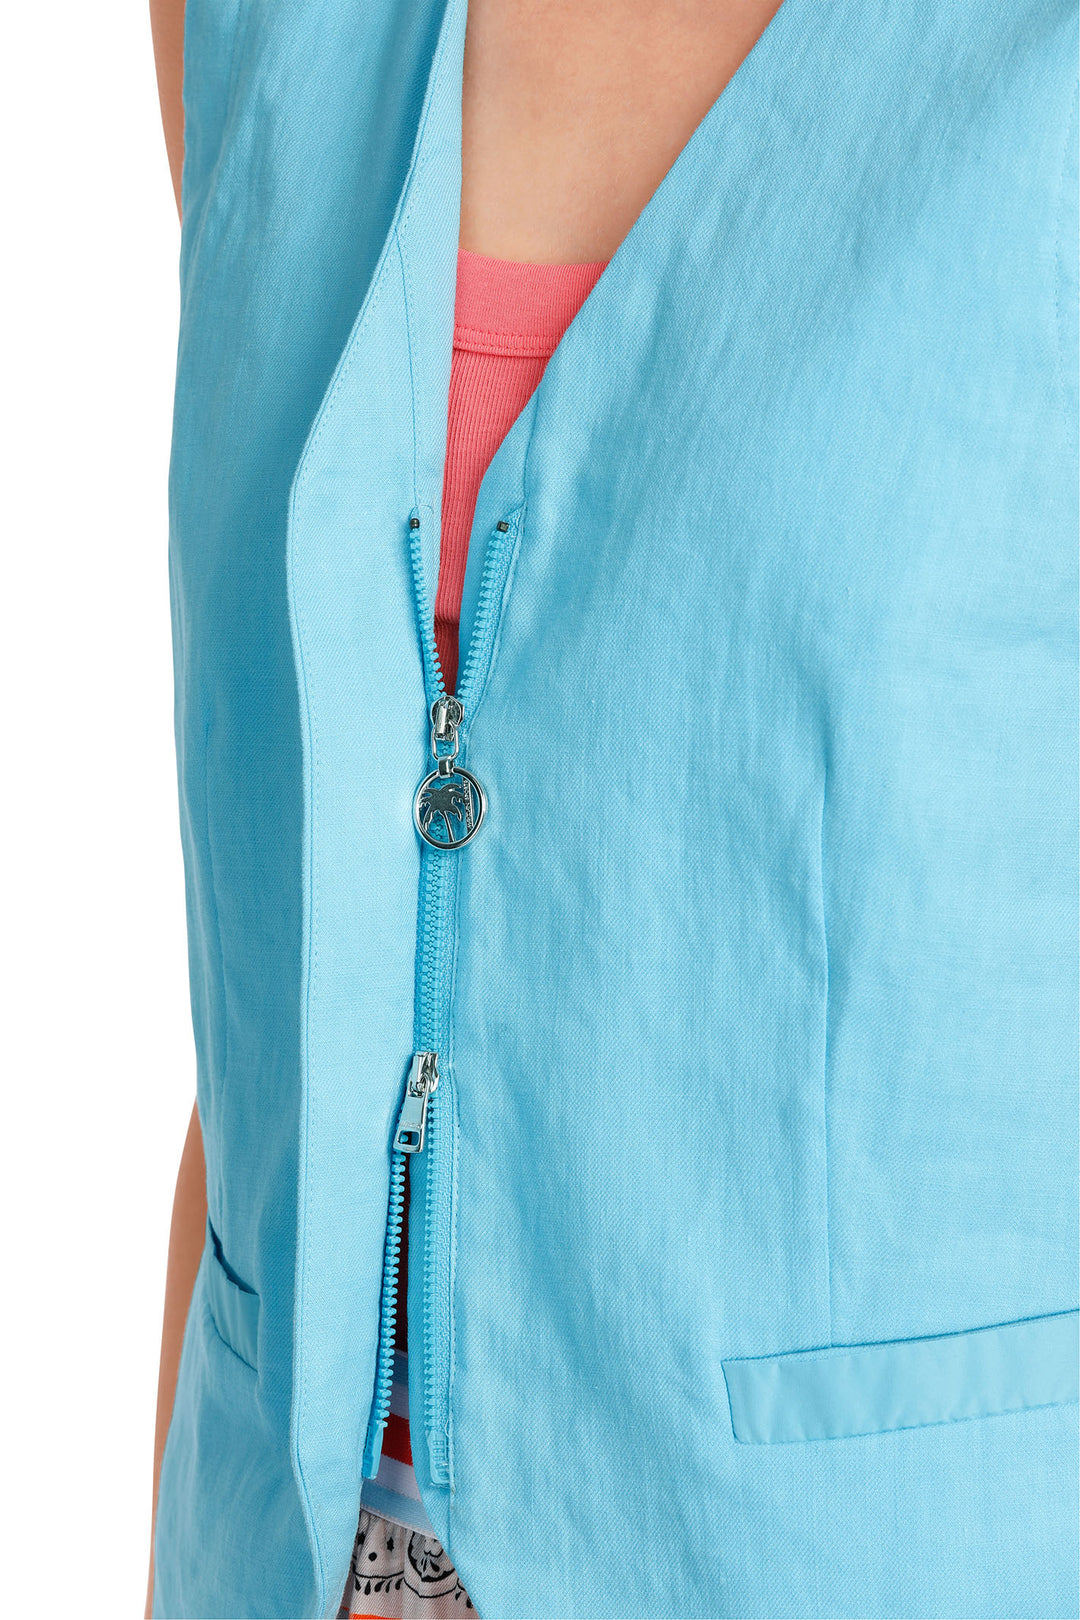 Marc Cain Sports WS 37.04 W03 339 Turquoise Blue Zip Waistcoat - Olivia Grace Fashion